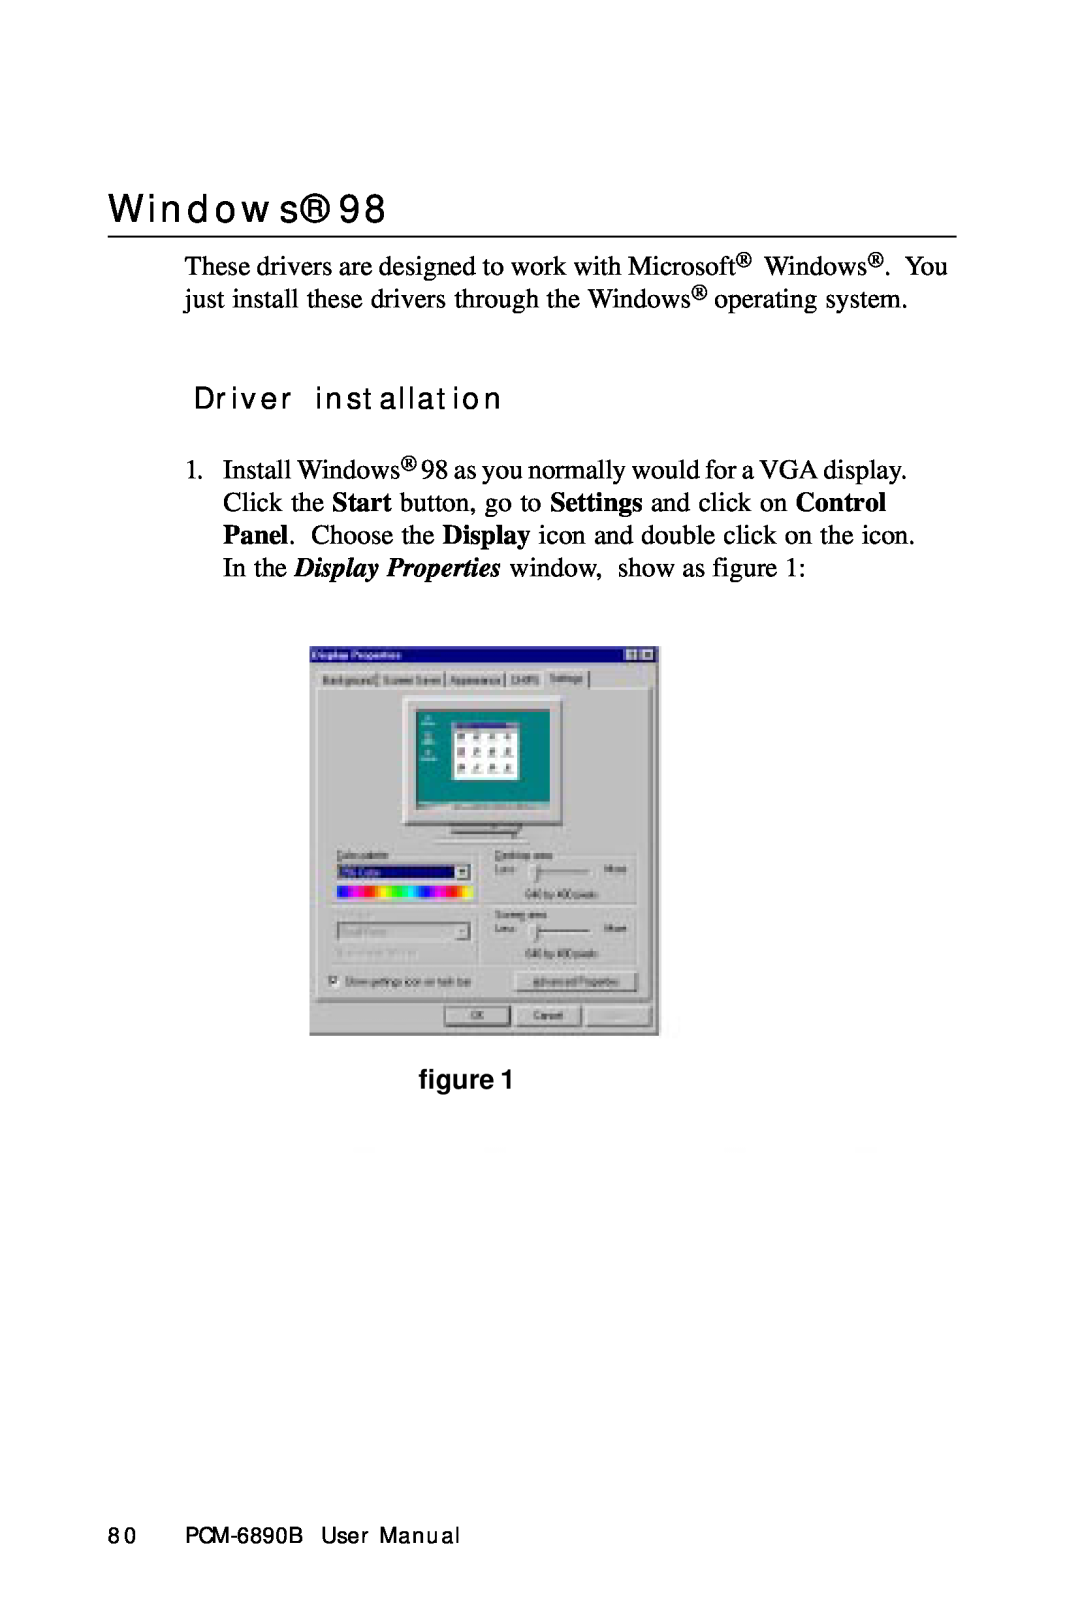 IBM PCM-6890B, All-in-One FC/Socket 370 Celeron manual Windows, Driver installation 